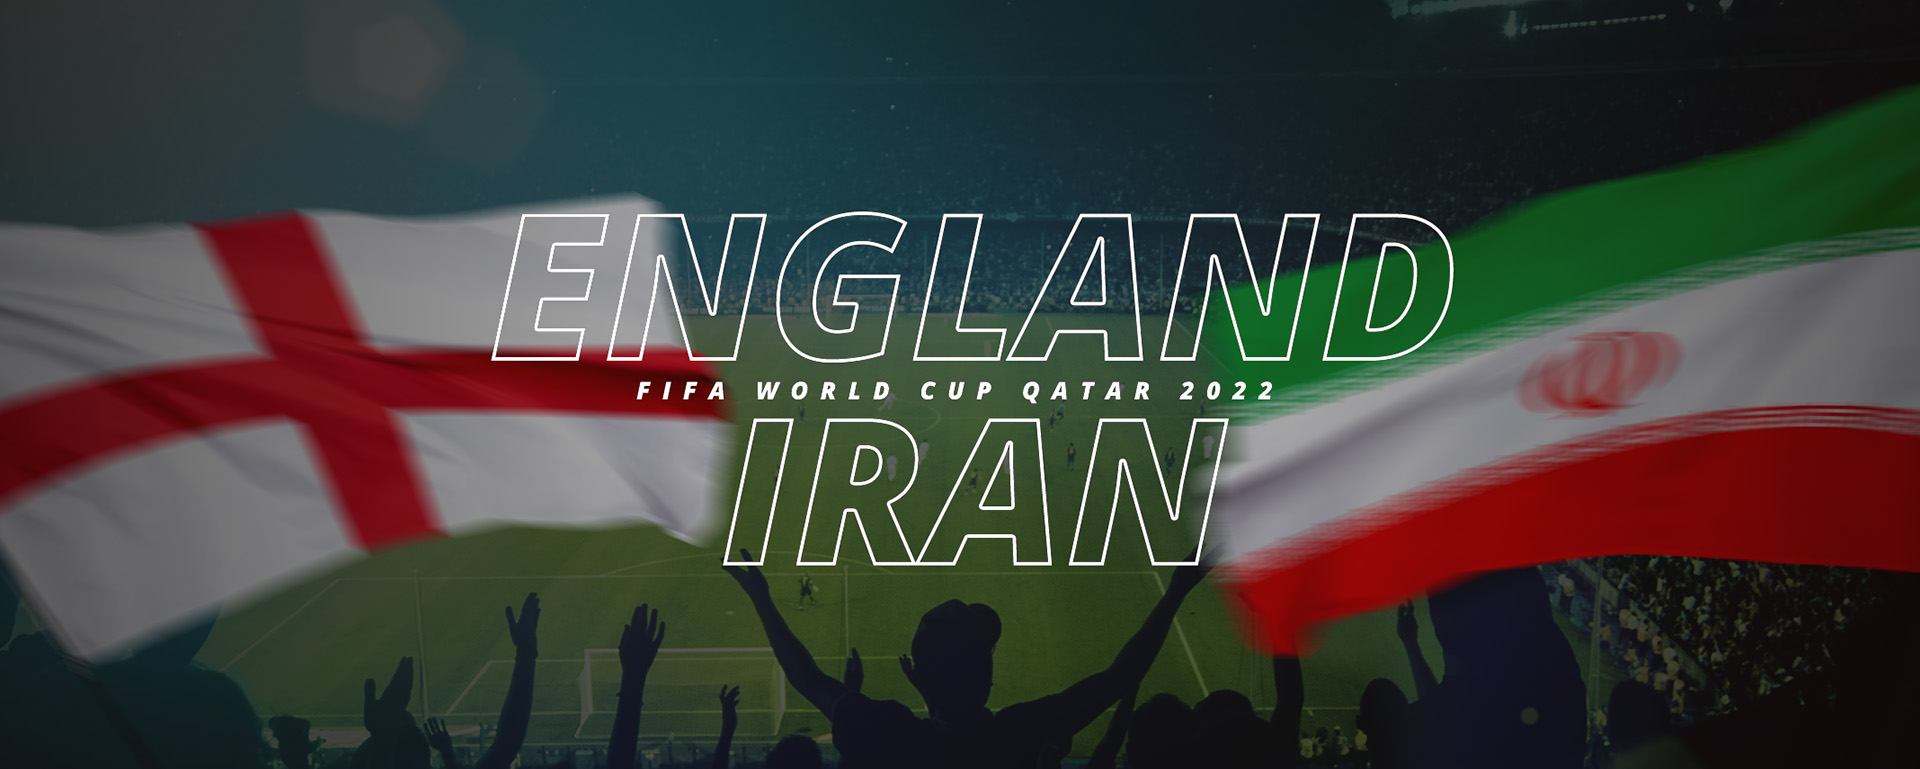 ENGLAND VS IRAN | FIFA WORLD CUP QATAR 2022